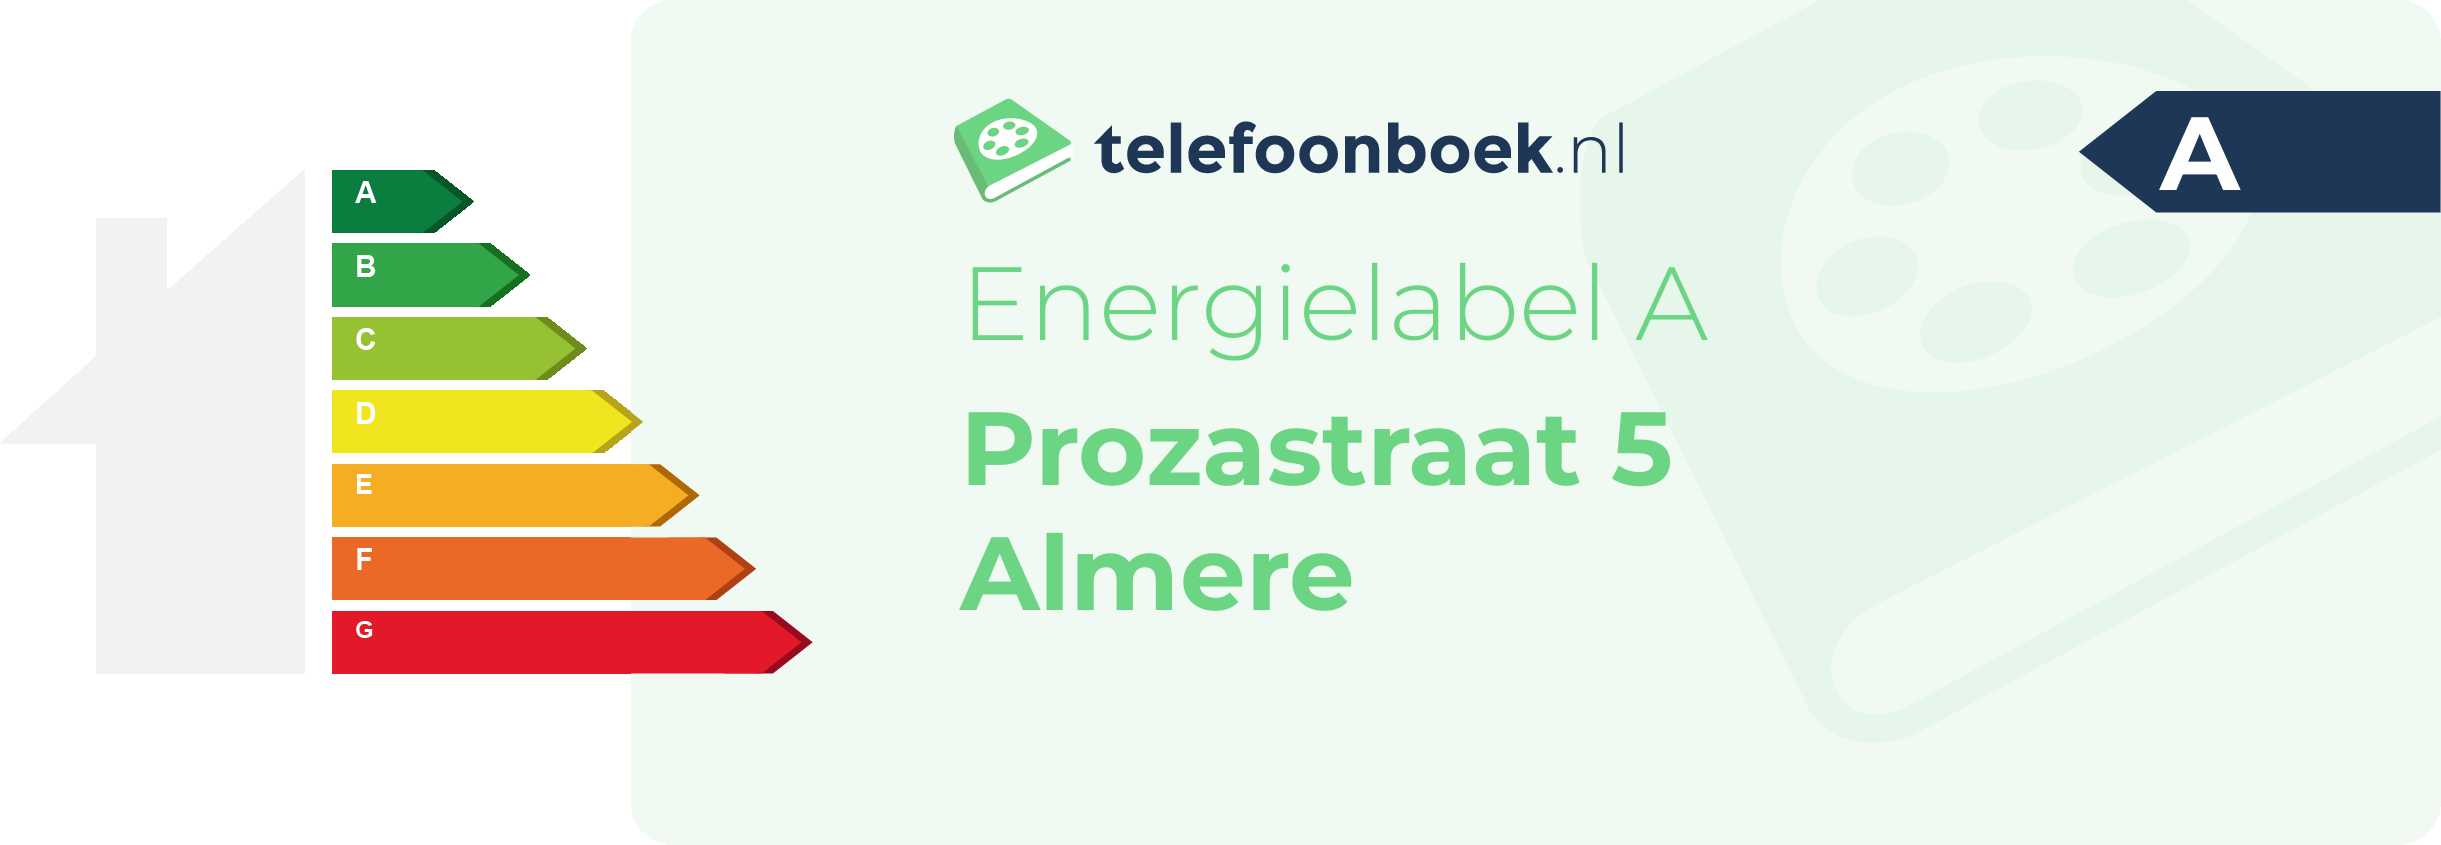 Energielabel Prozastraat 5 Almere